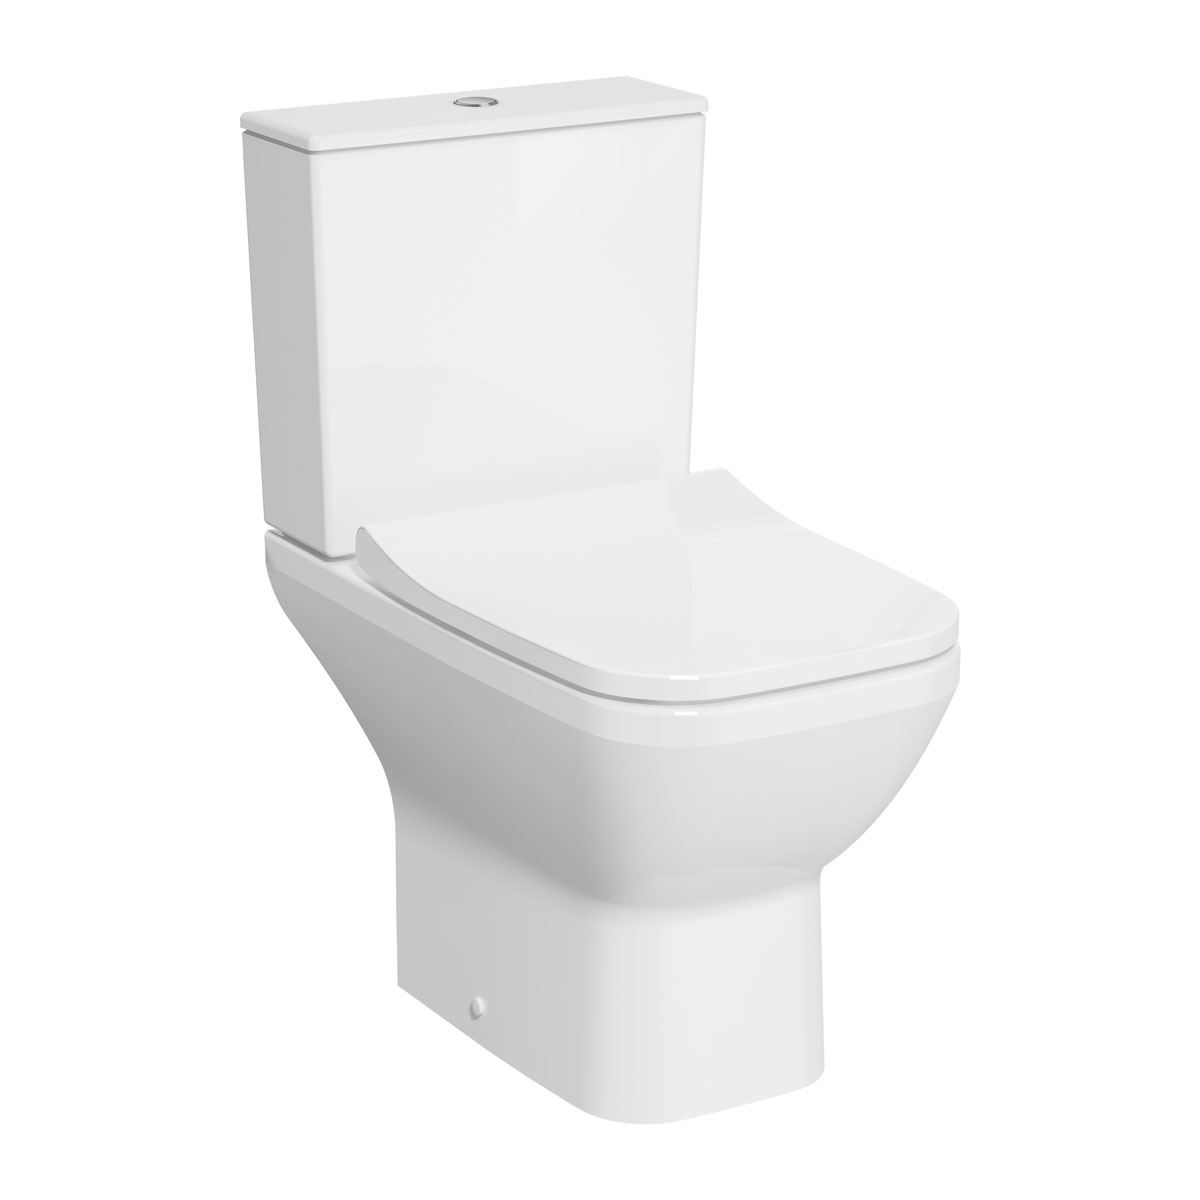 Integra Square Close Coupled WC Open back, Rim-ex, 62 cm, White